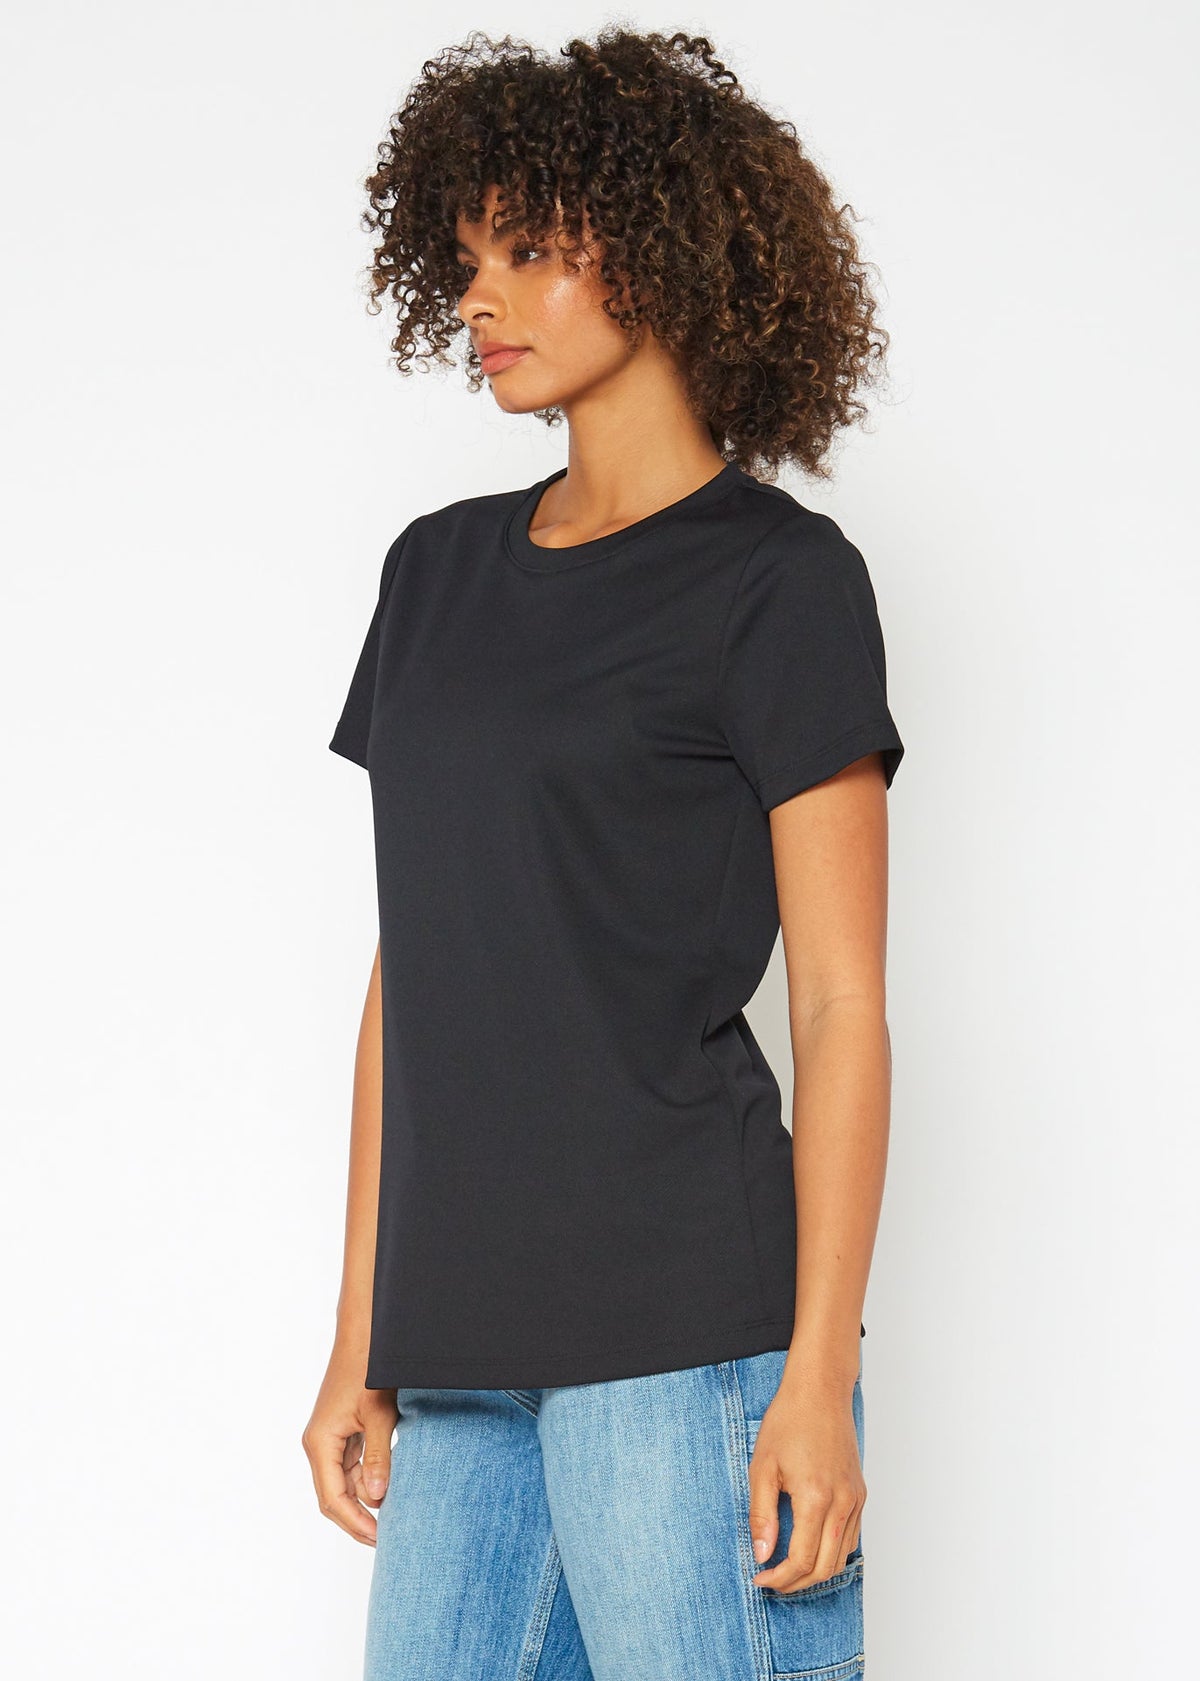 Women's Eco Friendly Reolite Tech T-shirt in Black by Shop at Konus